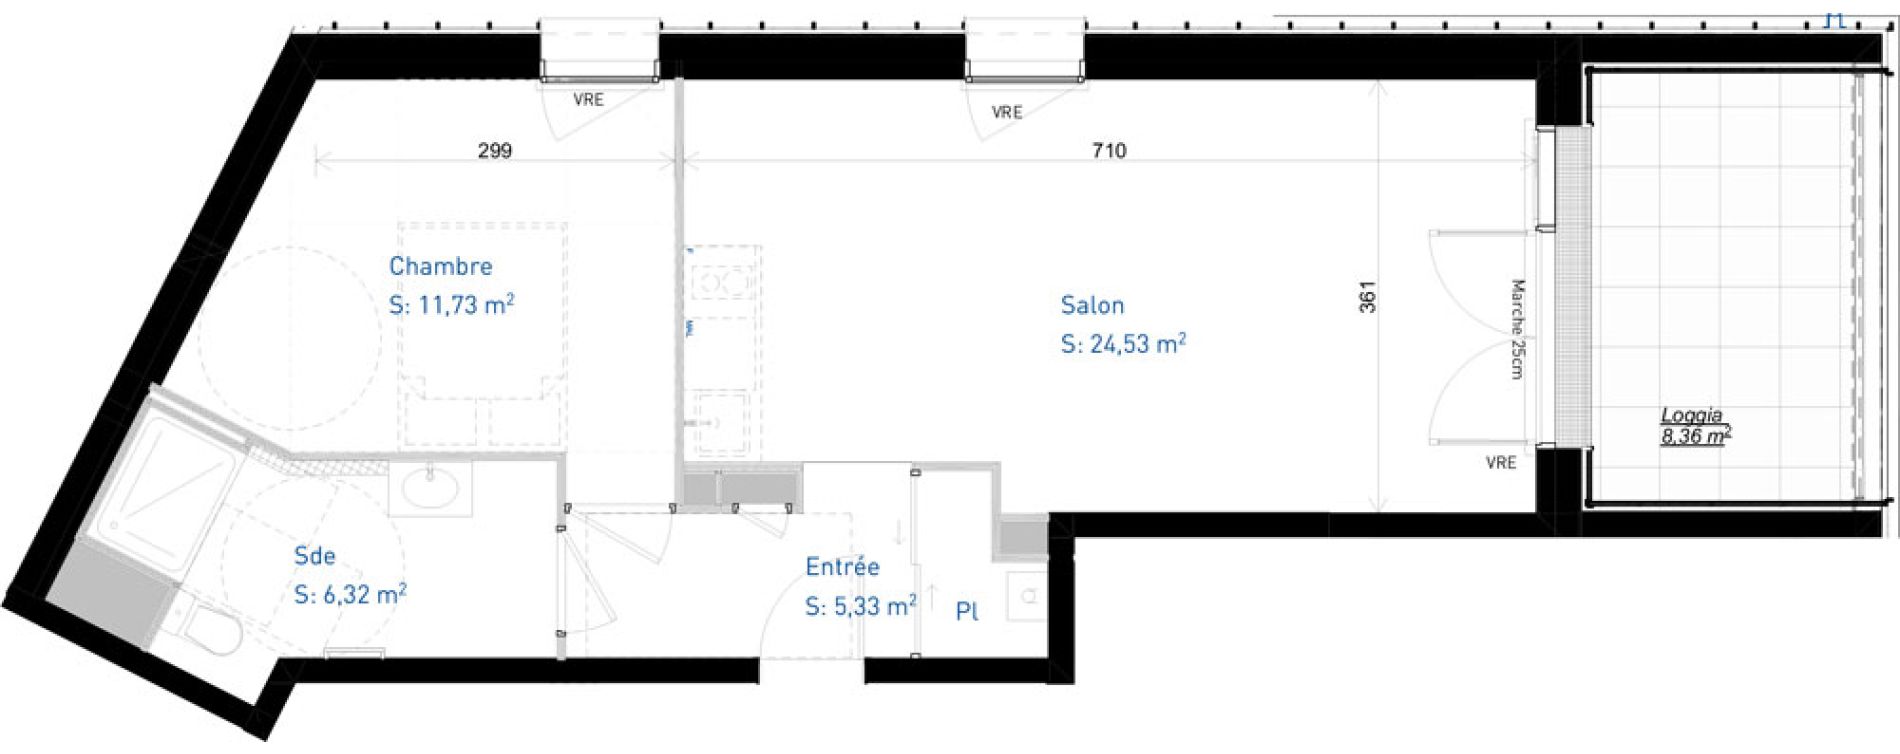 Appartement T2 de 47,91 m2 &agrave; Angers Maurice tardat